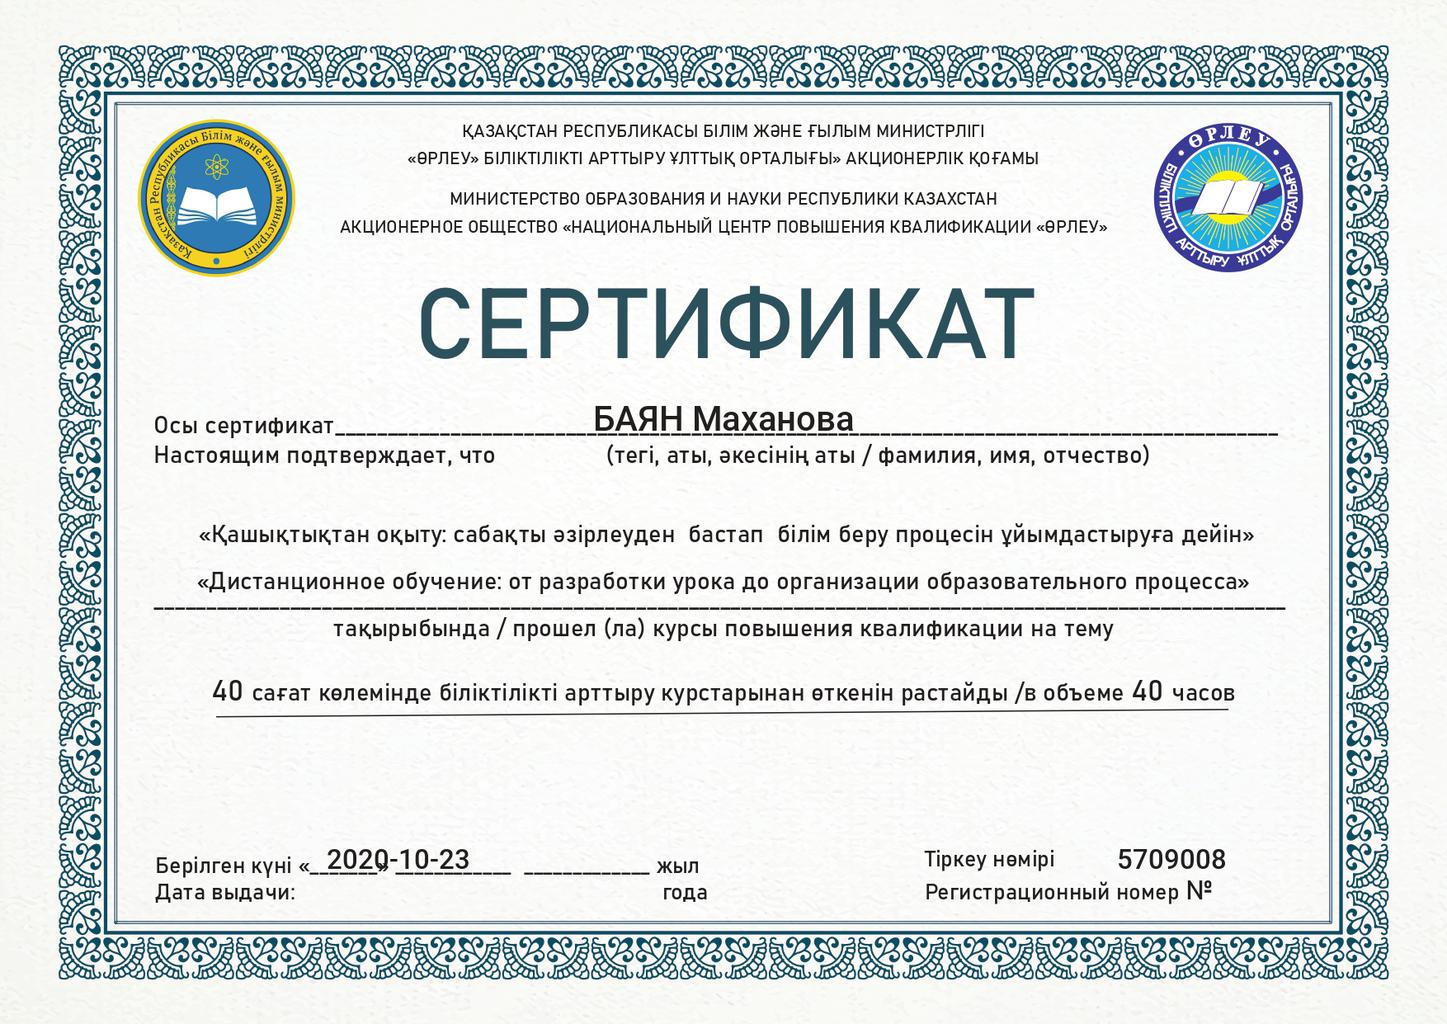 Сертификат. Сертификат Казахстан. Казахский сертификат. Сертификат на казахском языке. Білім беру тест